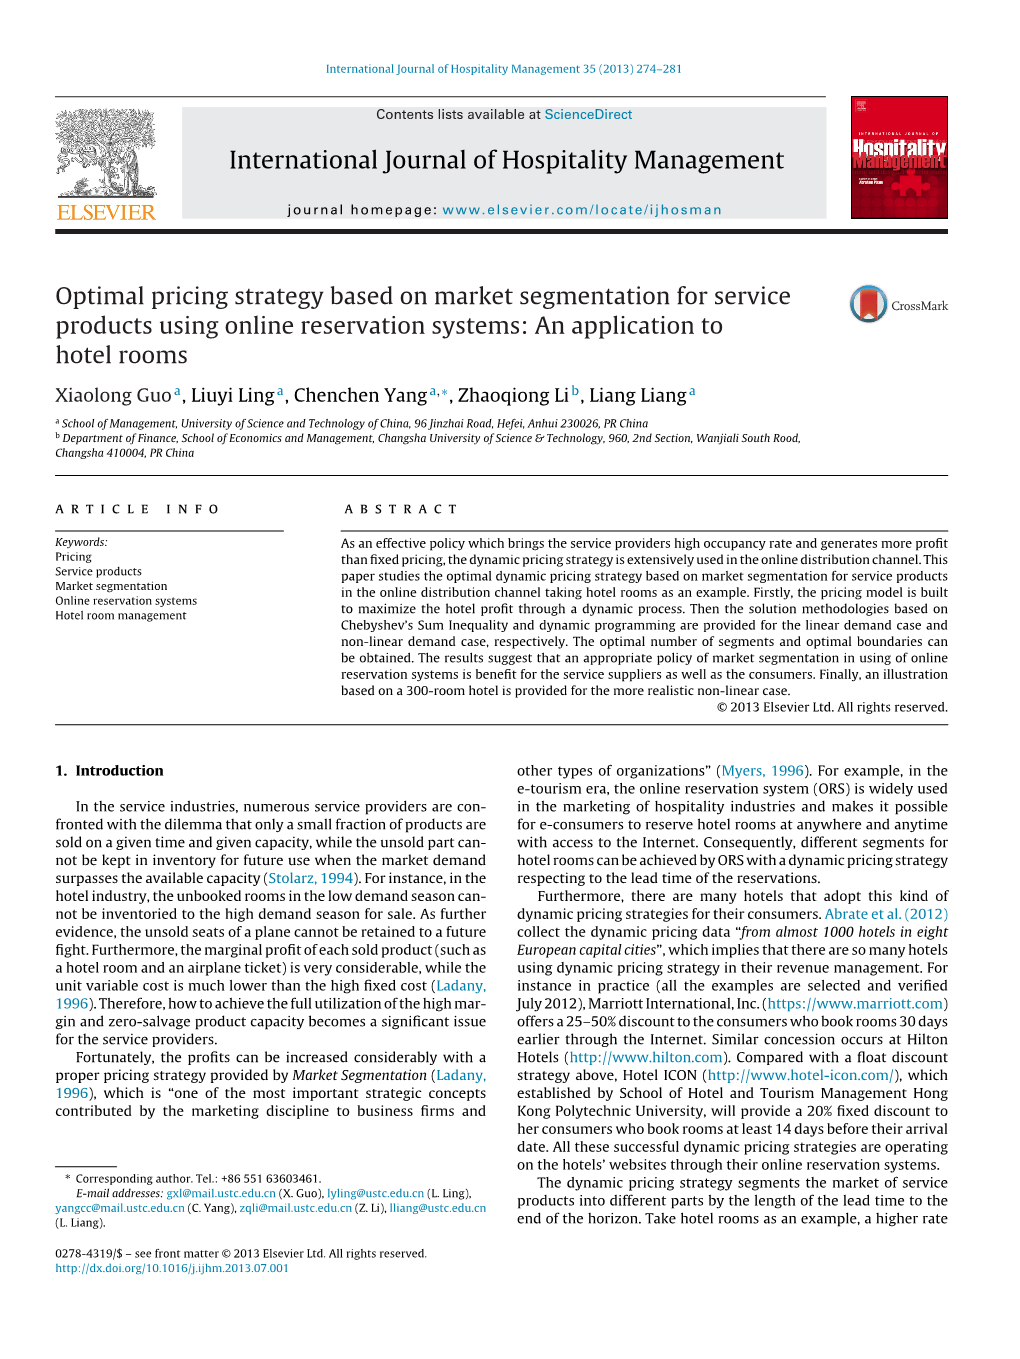 Optimal Pricing Strategy Based on Market Segmentation for Service